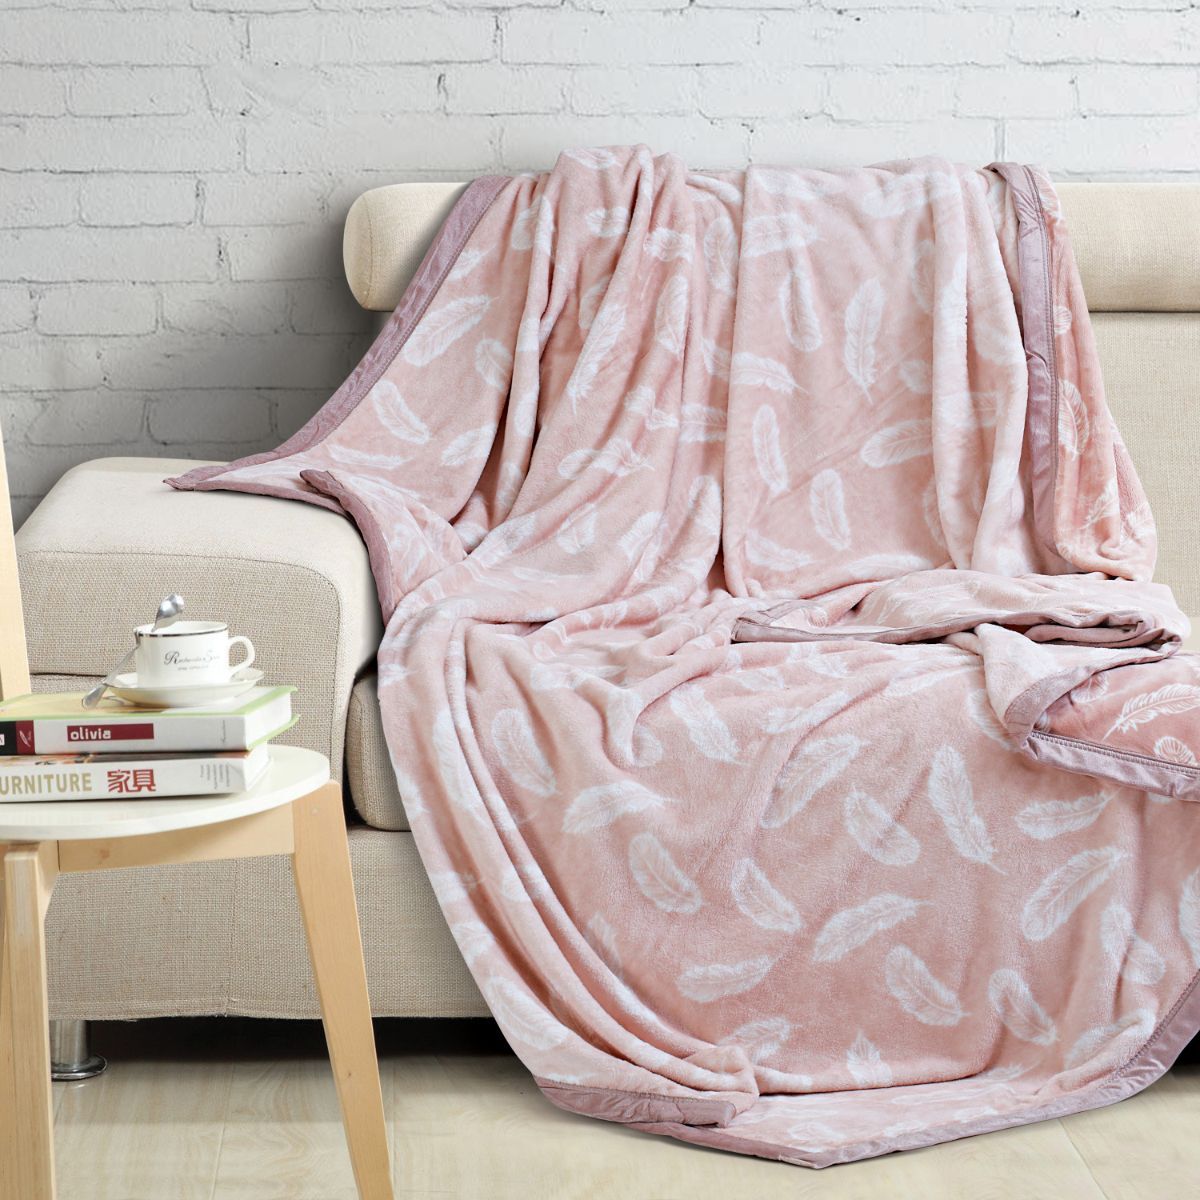 Malako Double Bed Blanket - Heavy Plush Peach Leaves Printed Blanket